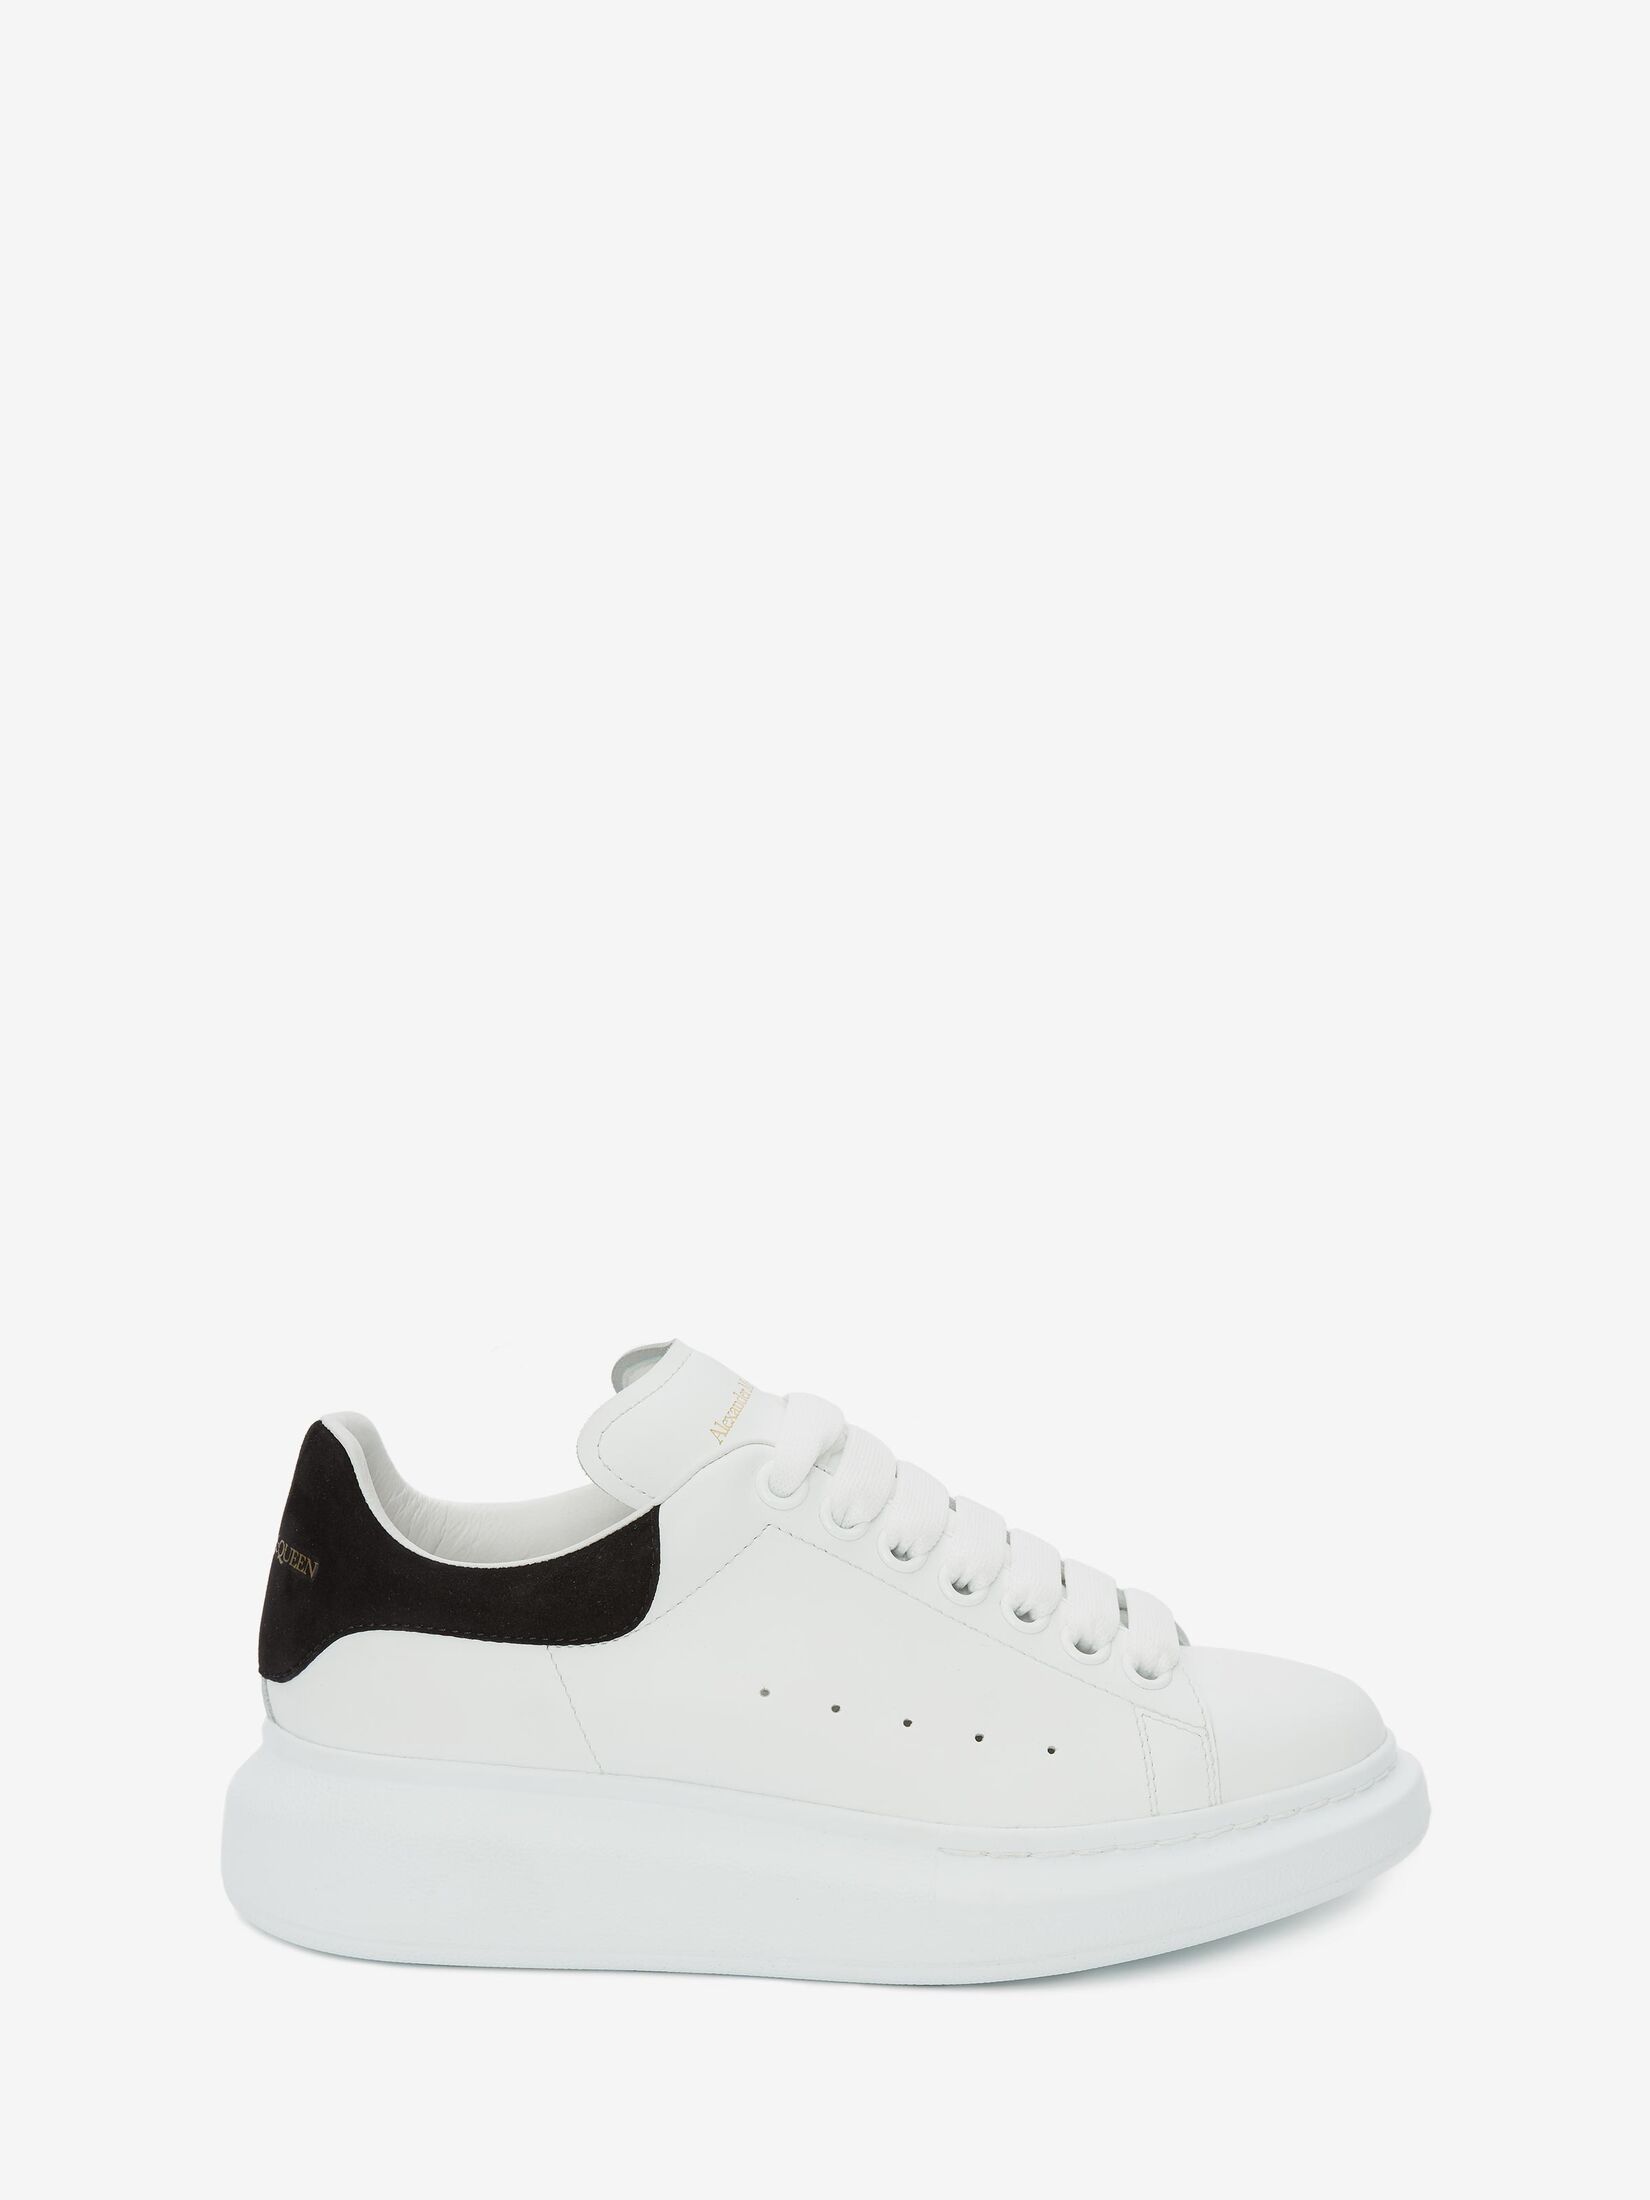 Alexander McQueen - White-silver oversized leather sneakers -  fashionporto.com